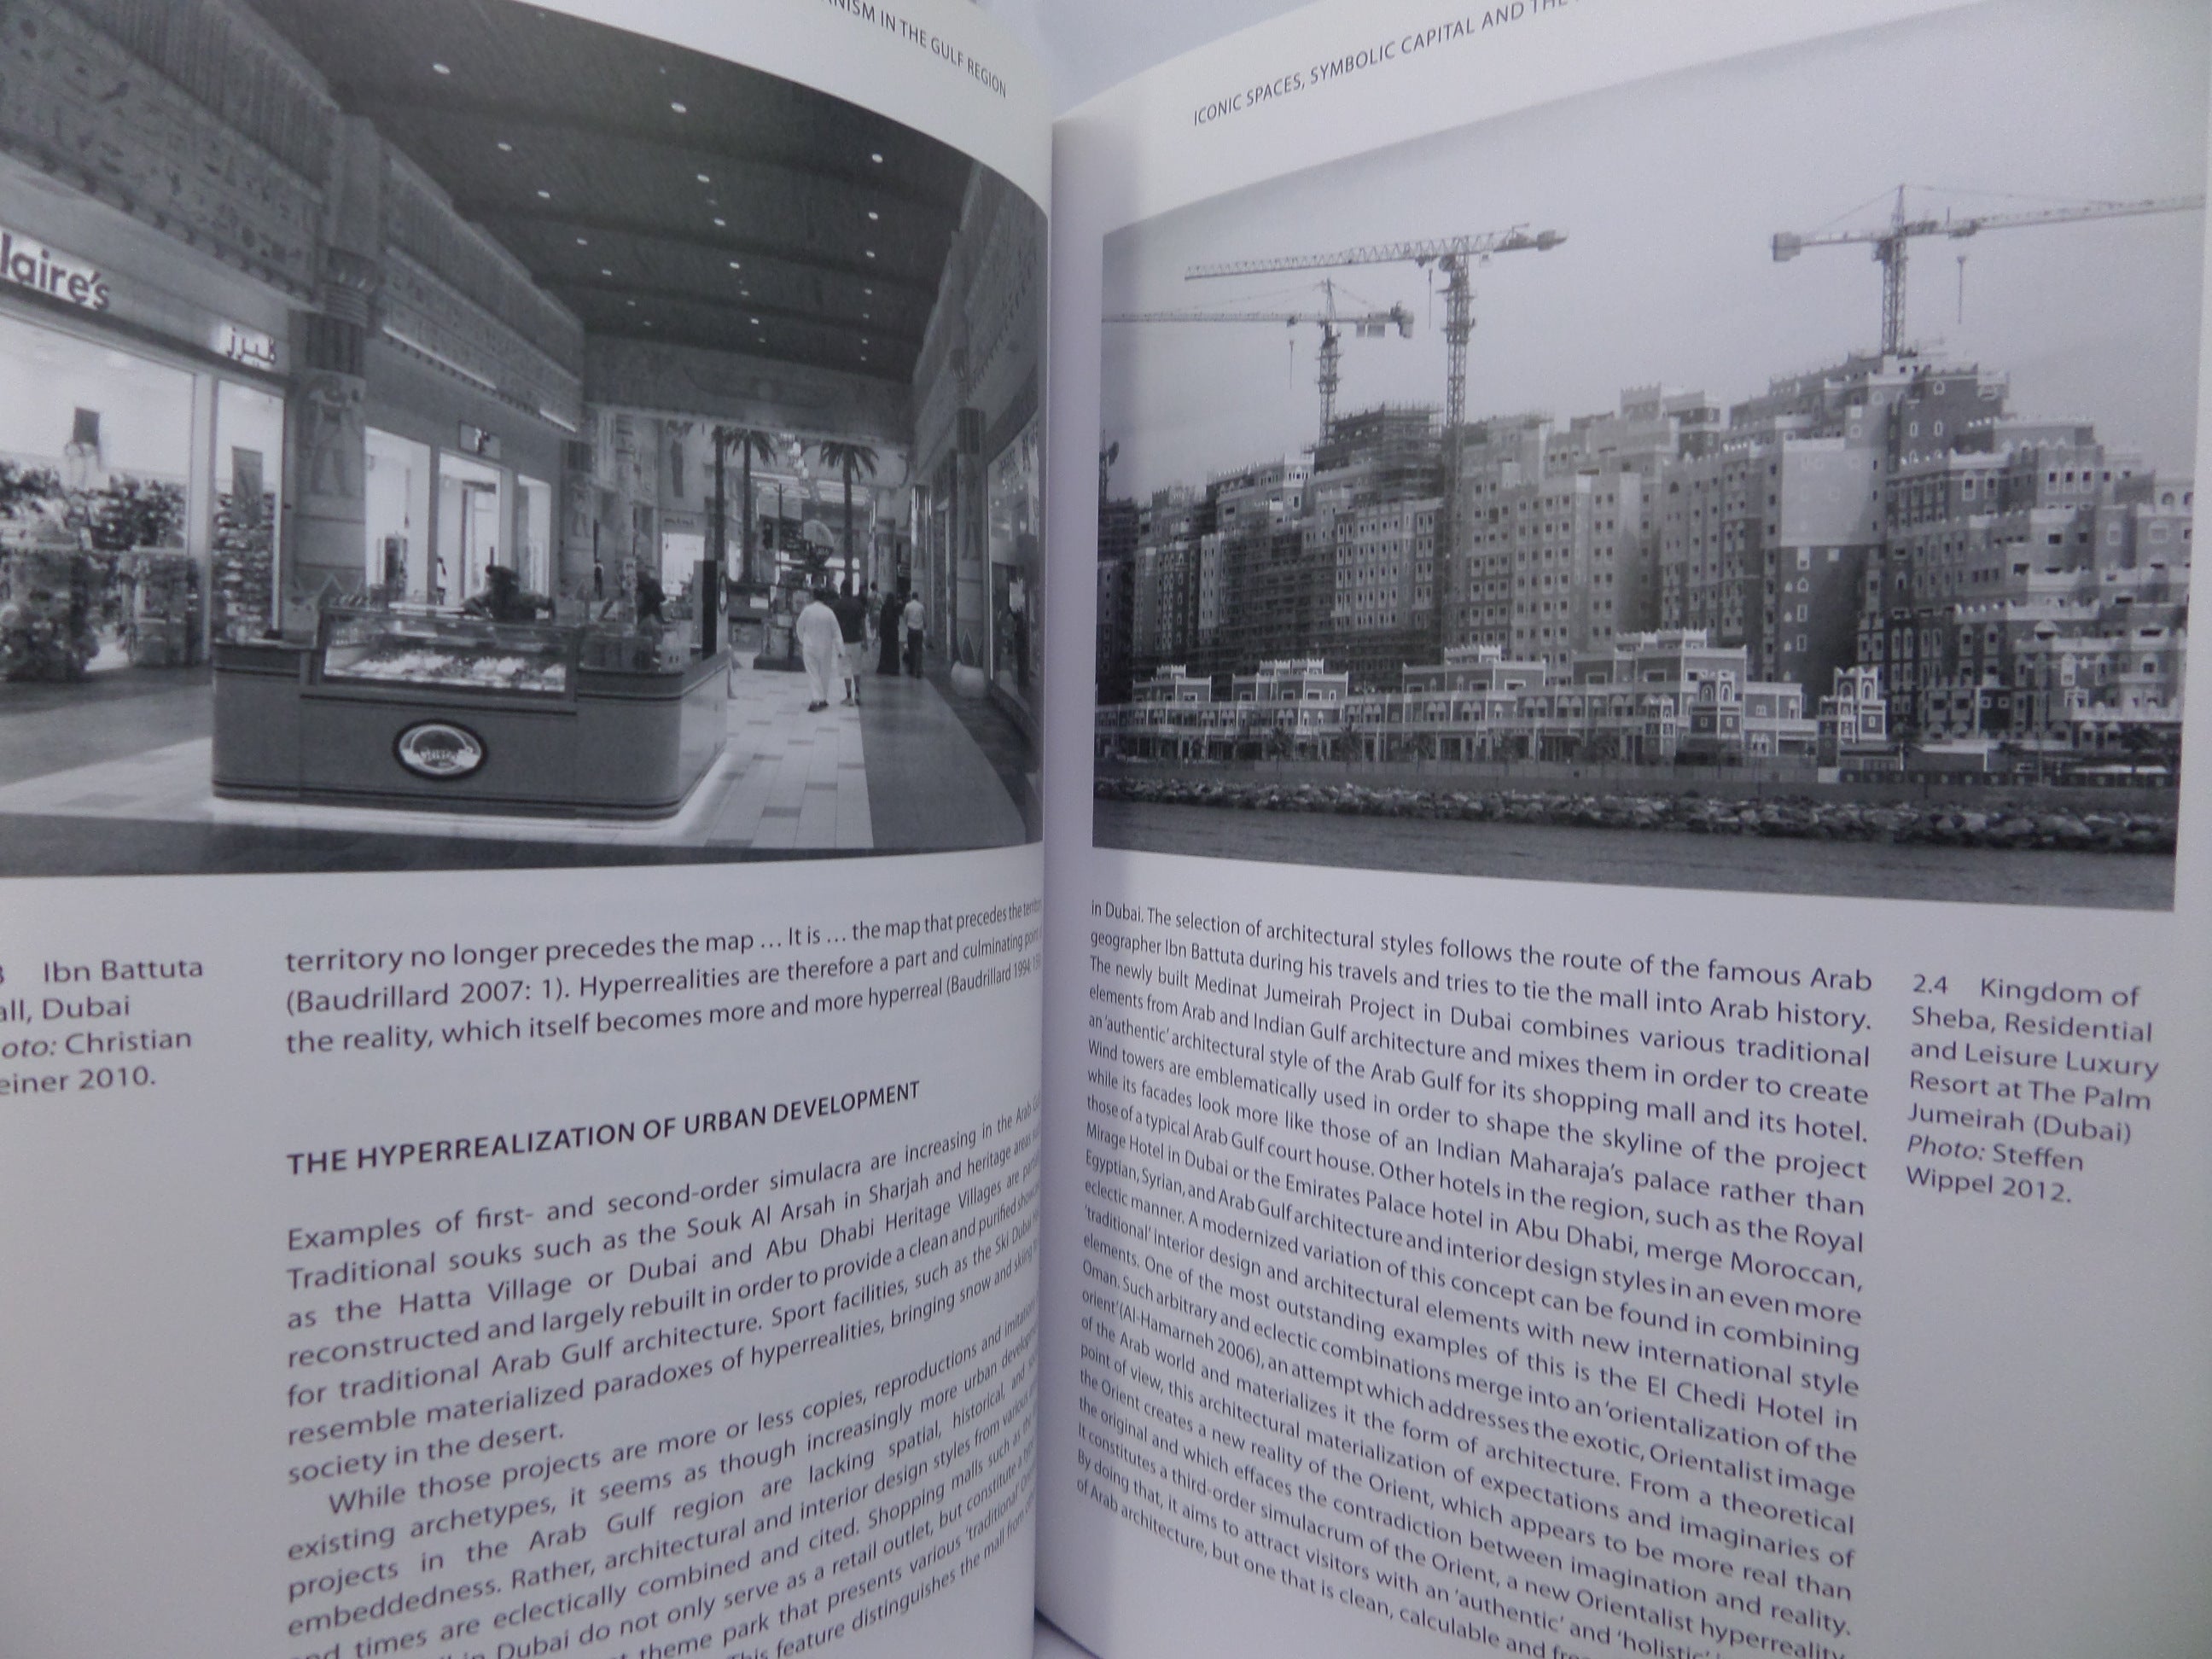 UNDER CONSTRUCTION: LOGICS OF URBANISM IN THE GULF REGION 2014 HARDCOVER